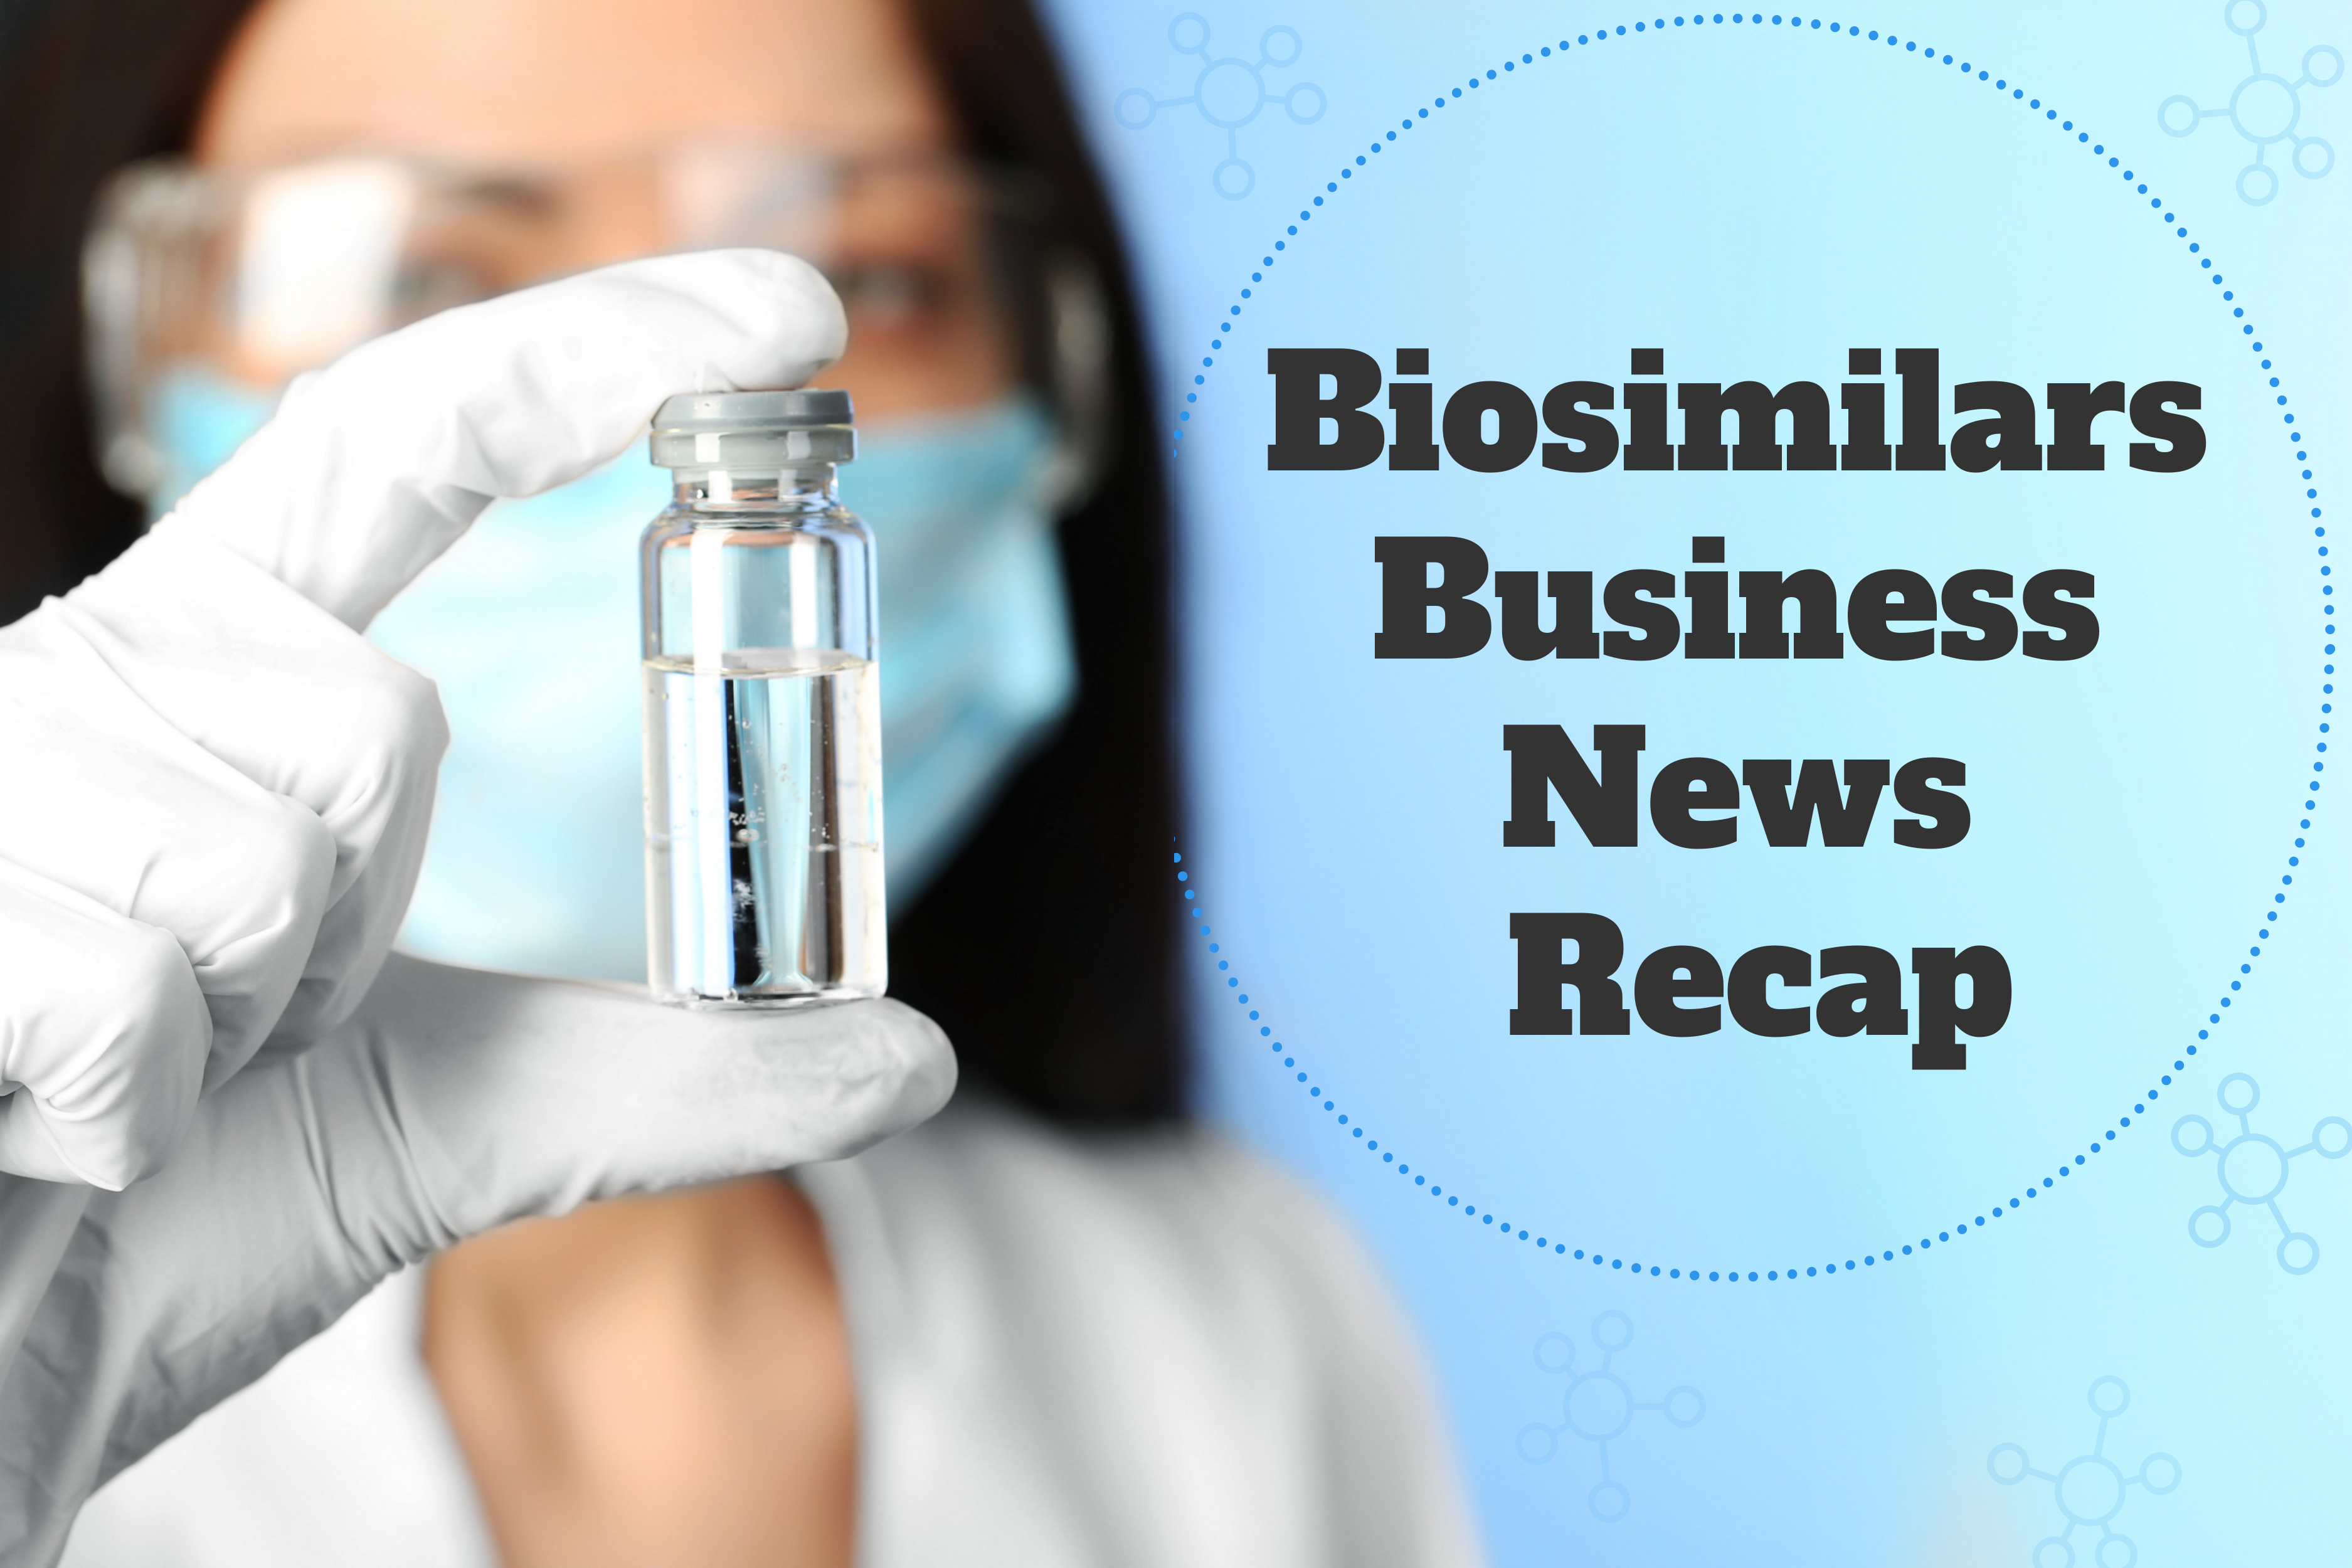 biosimilars business news recap, female doctor holding a vial of medicine